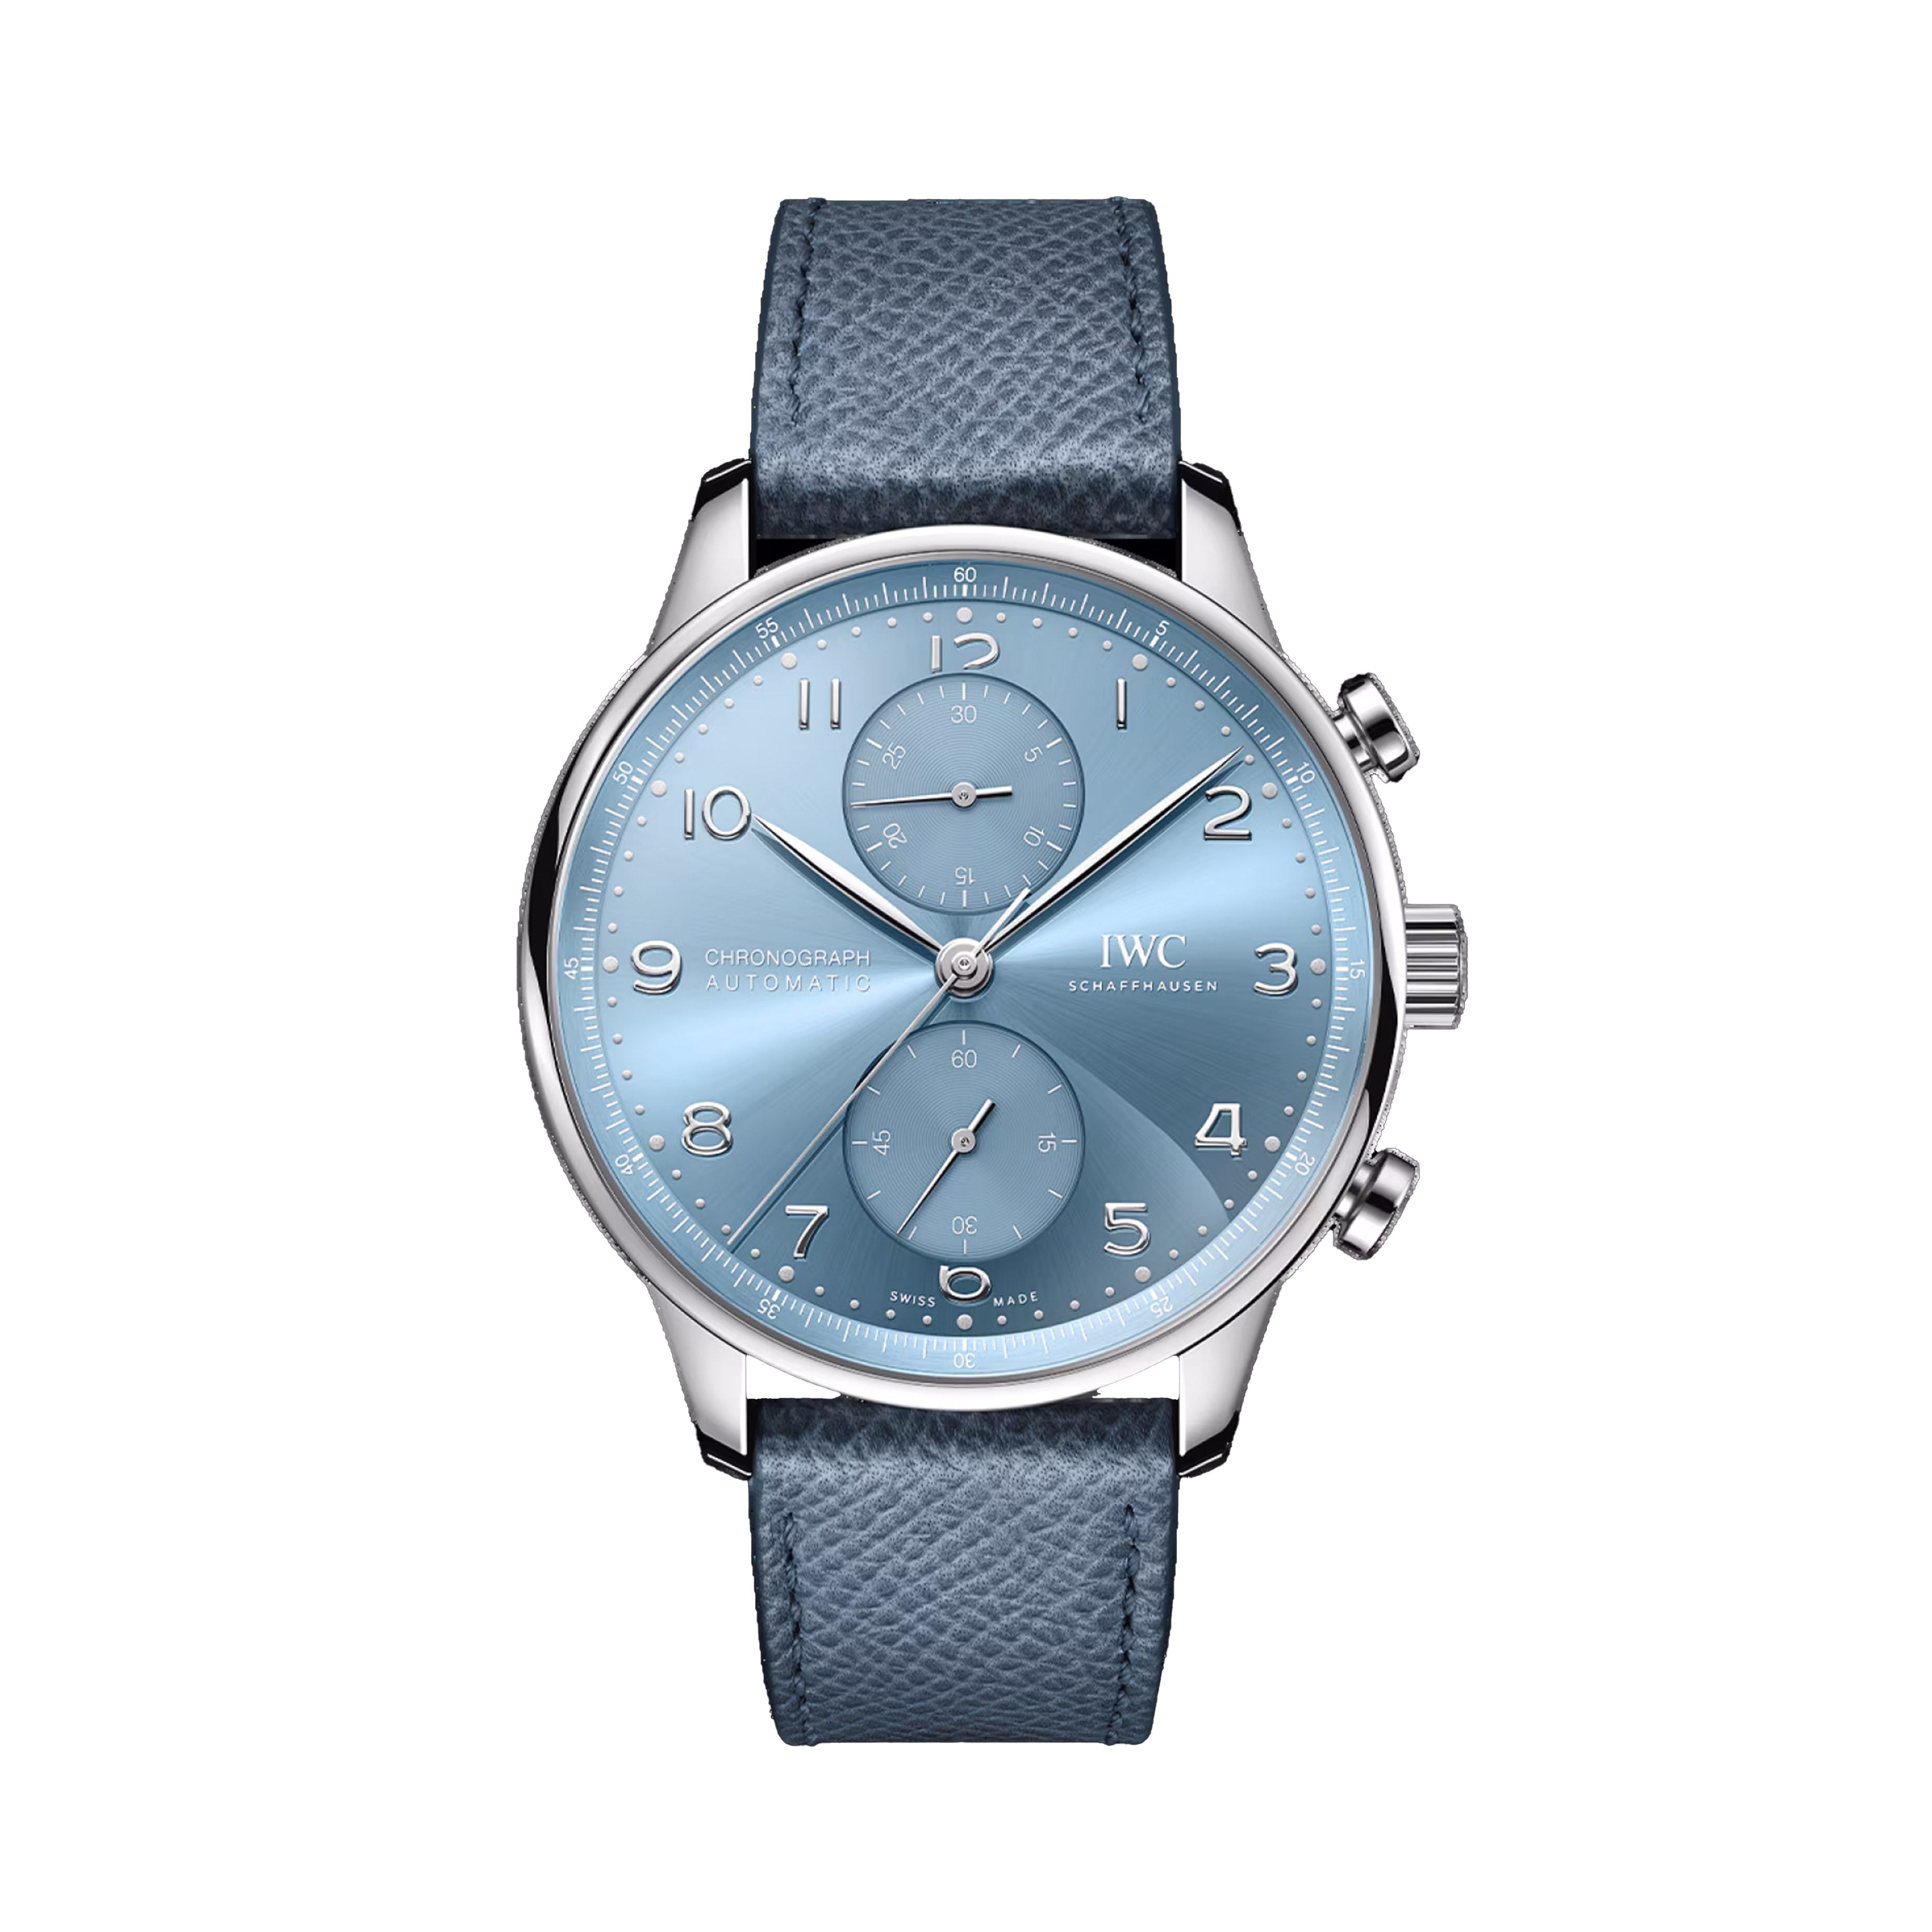 IWC Portugieser Chrongraph Watch, 41mm Blue Dial, IW371626